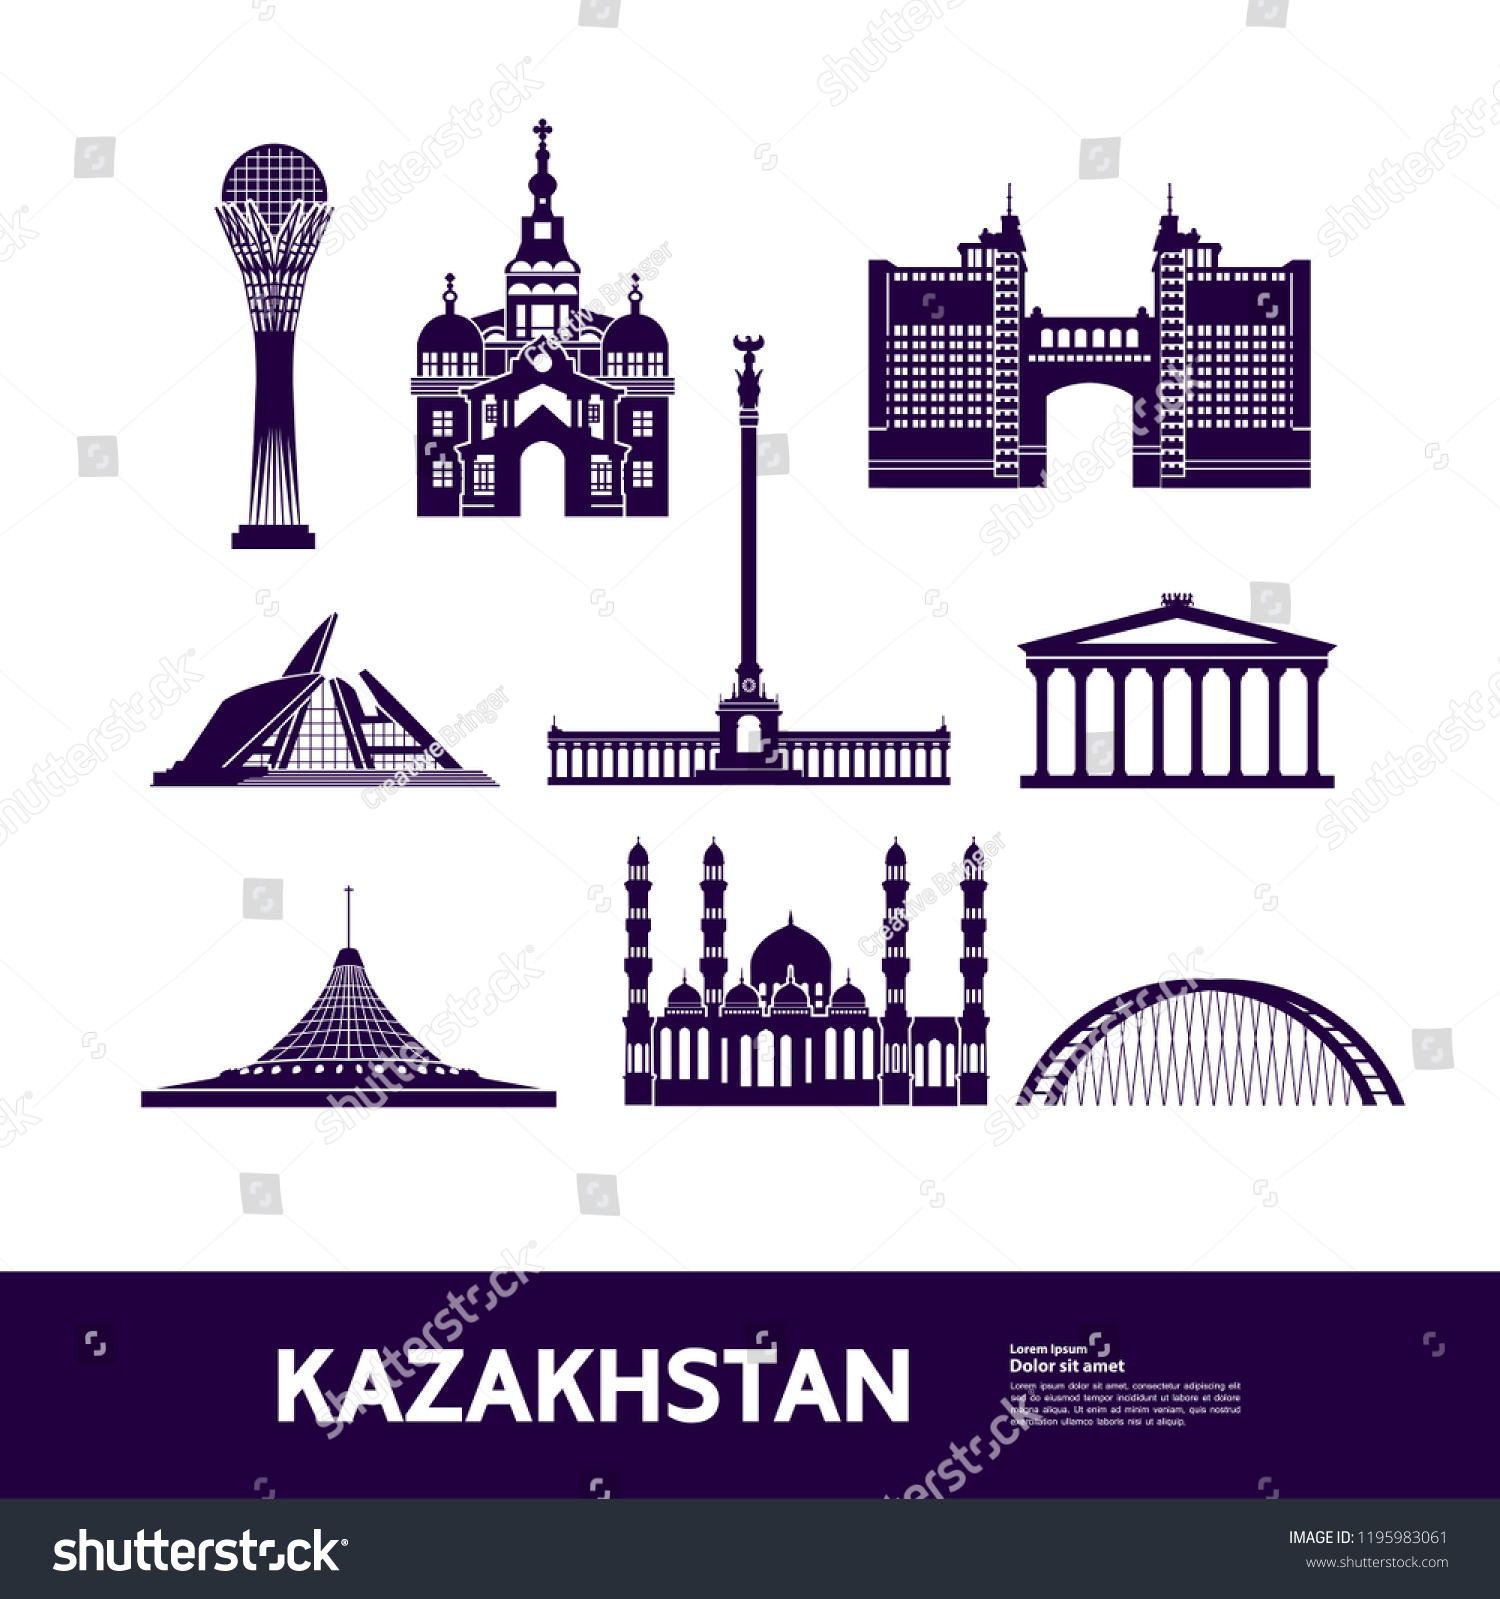 Kazakhstan Travel Destination vector. #1195983061